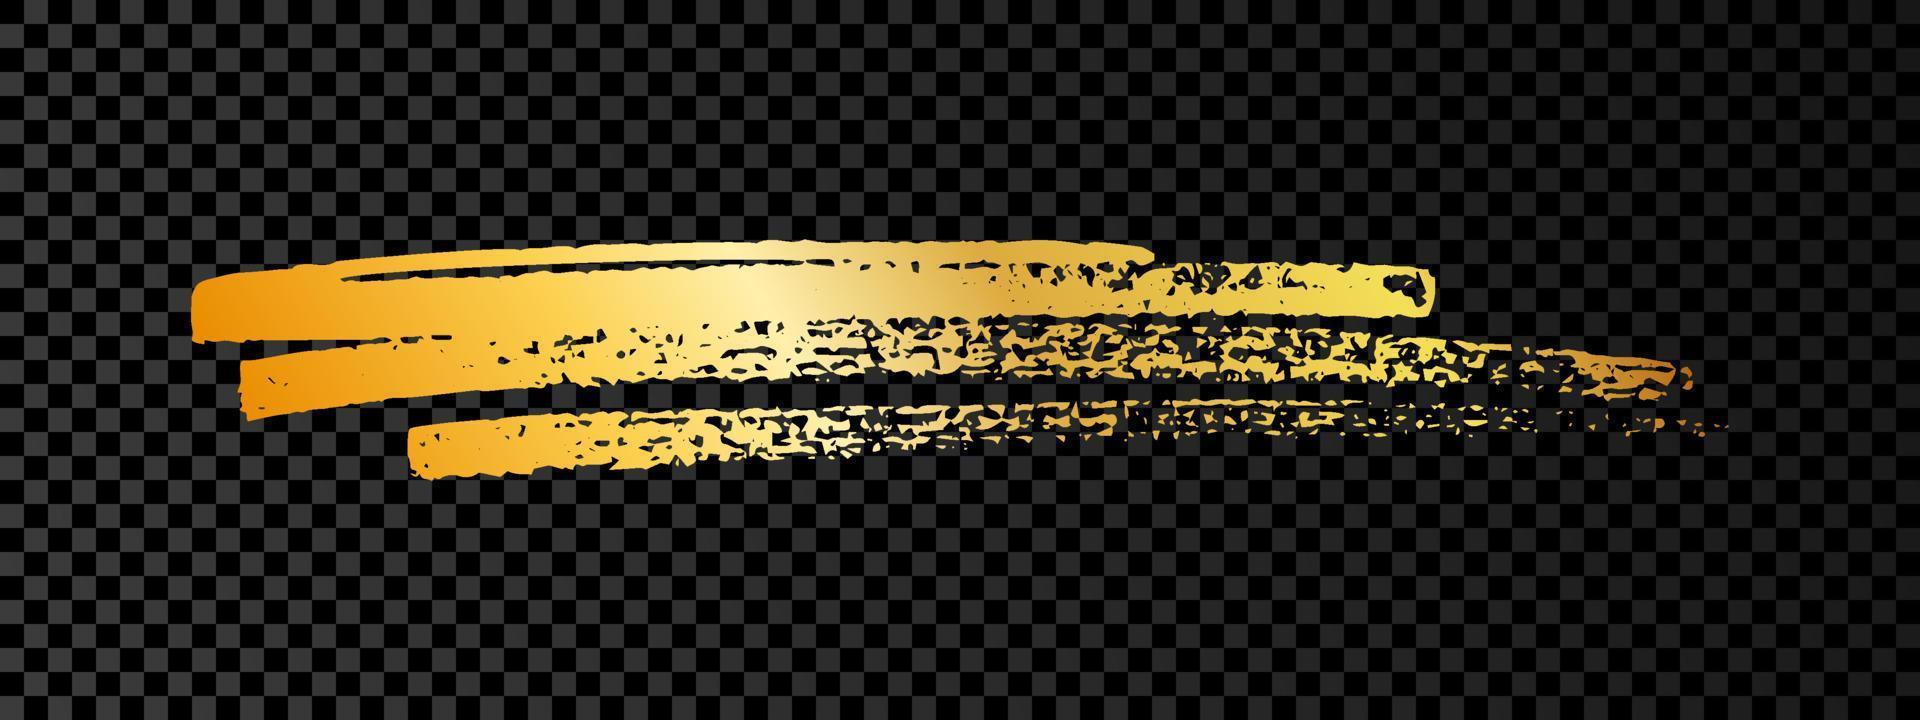 goldener Pinselabstrich. abstrakter goldener glitzernder skizzenhafter kritzelabstrich auf dunklem transparentem hintergrund. Vektor-Illustration. vektor